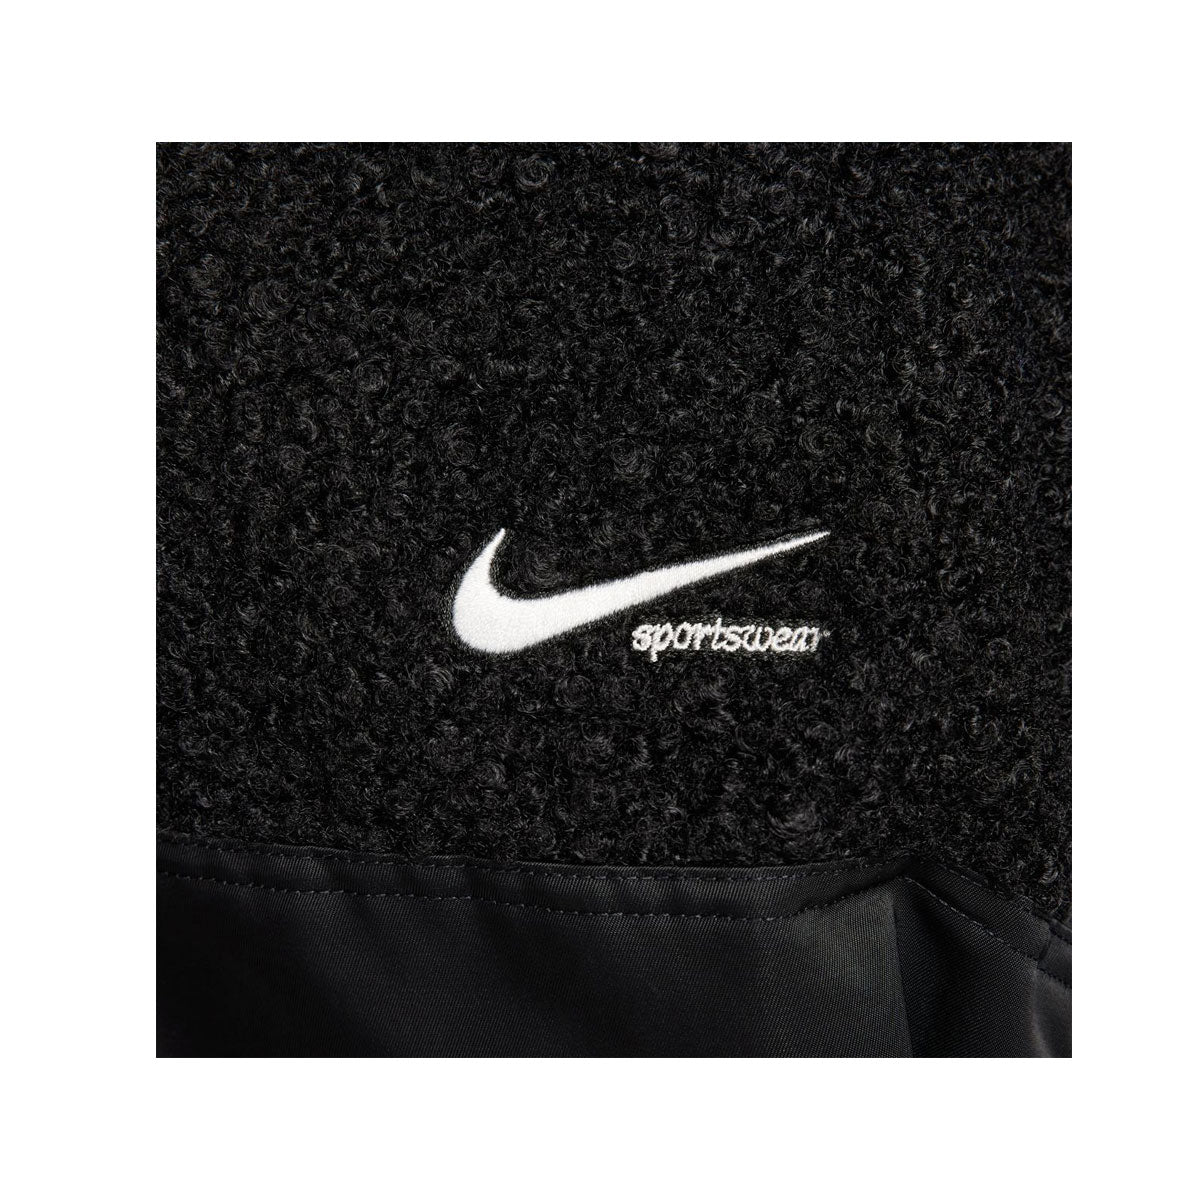 Nike Sportswear Collection Women's High-Pile Fleece Bomber Jacket